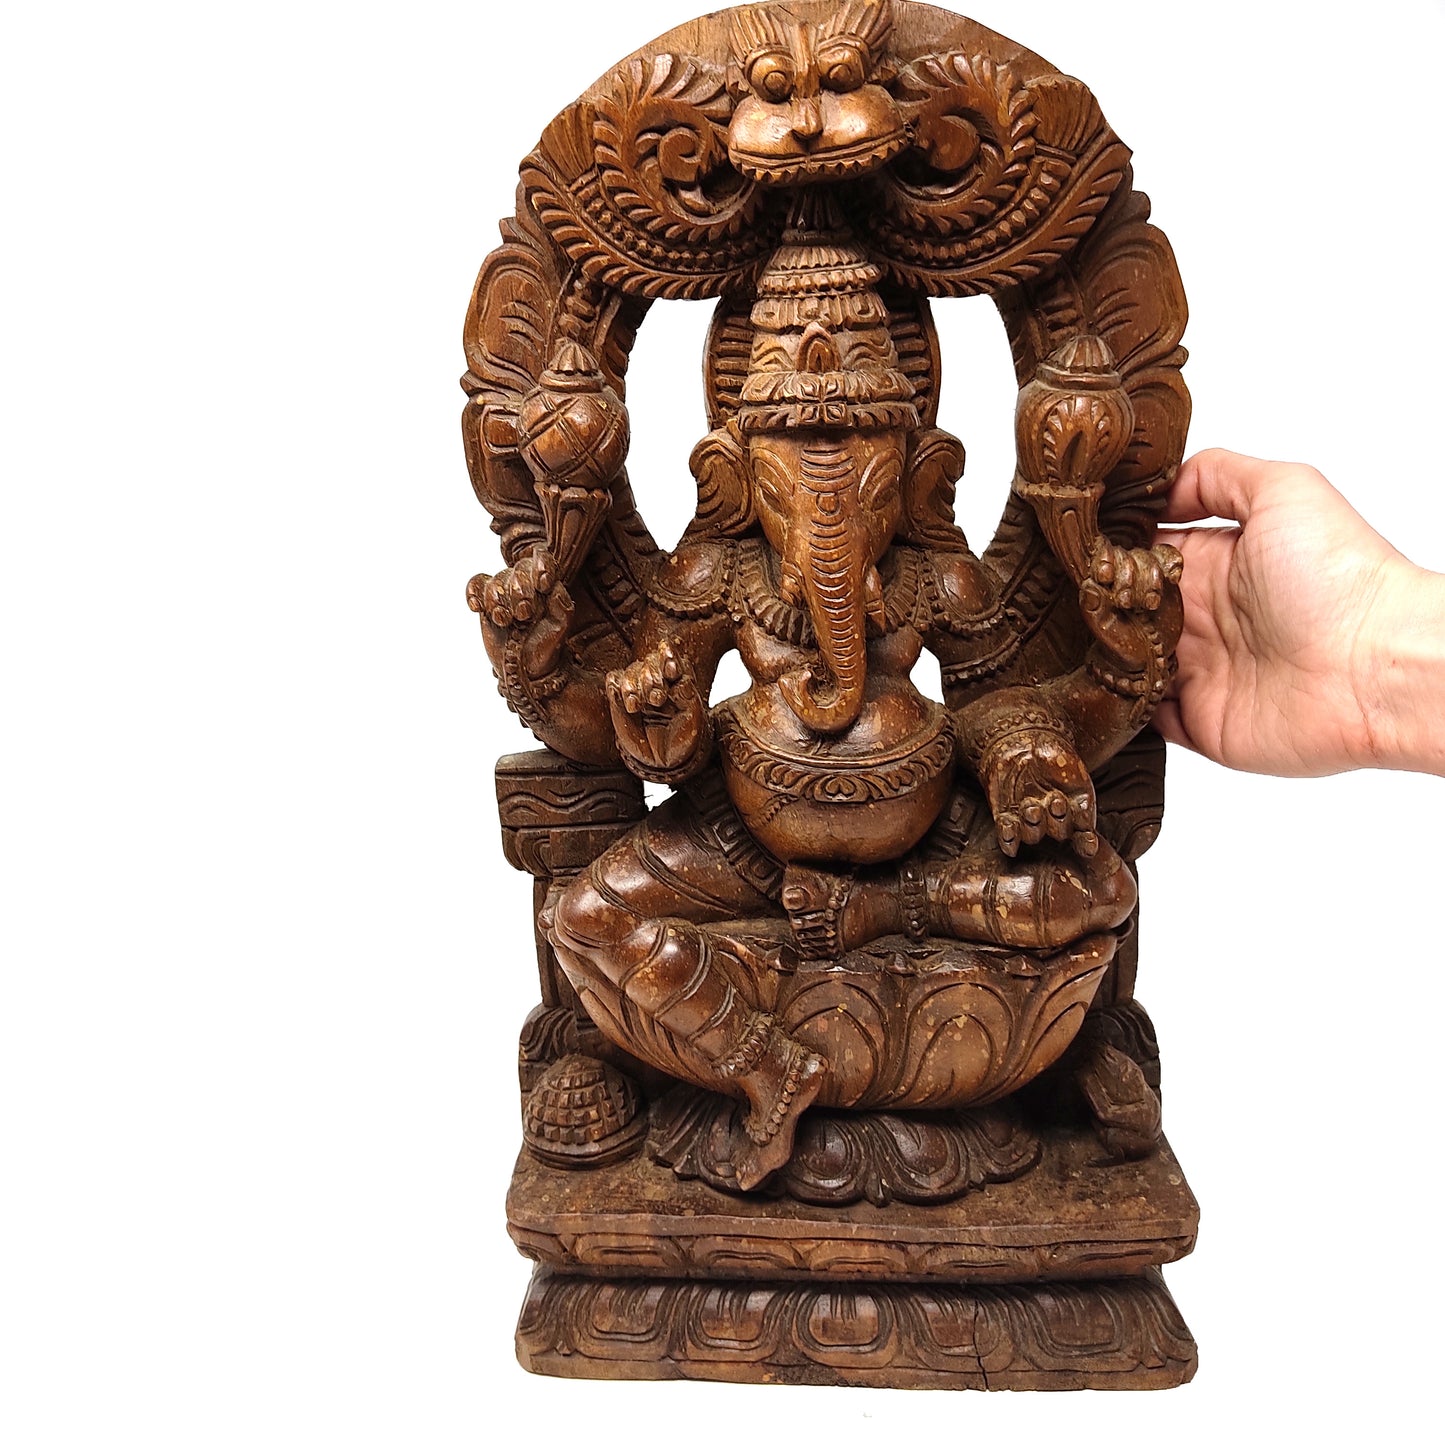 Vintage Ganesh Wood Carving Wall Hanging -  Hindu Elephant God Wall Decor  18"